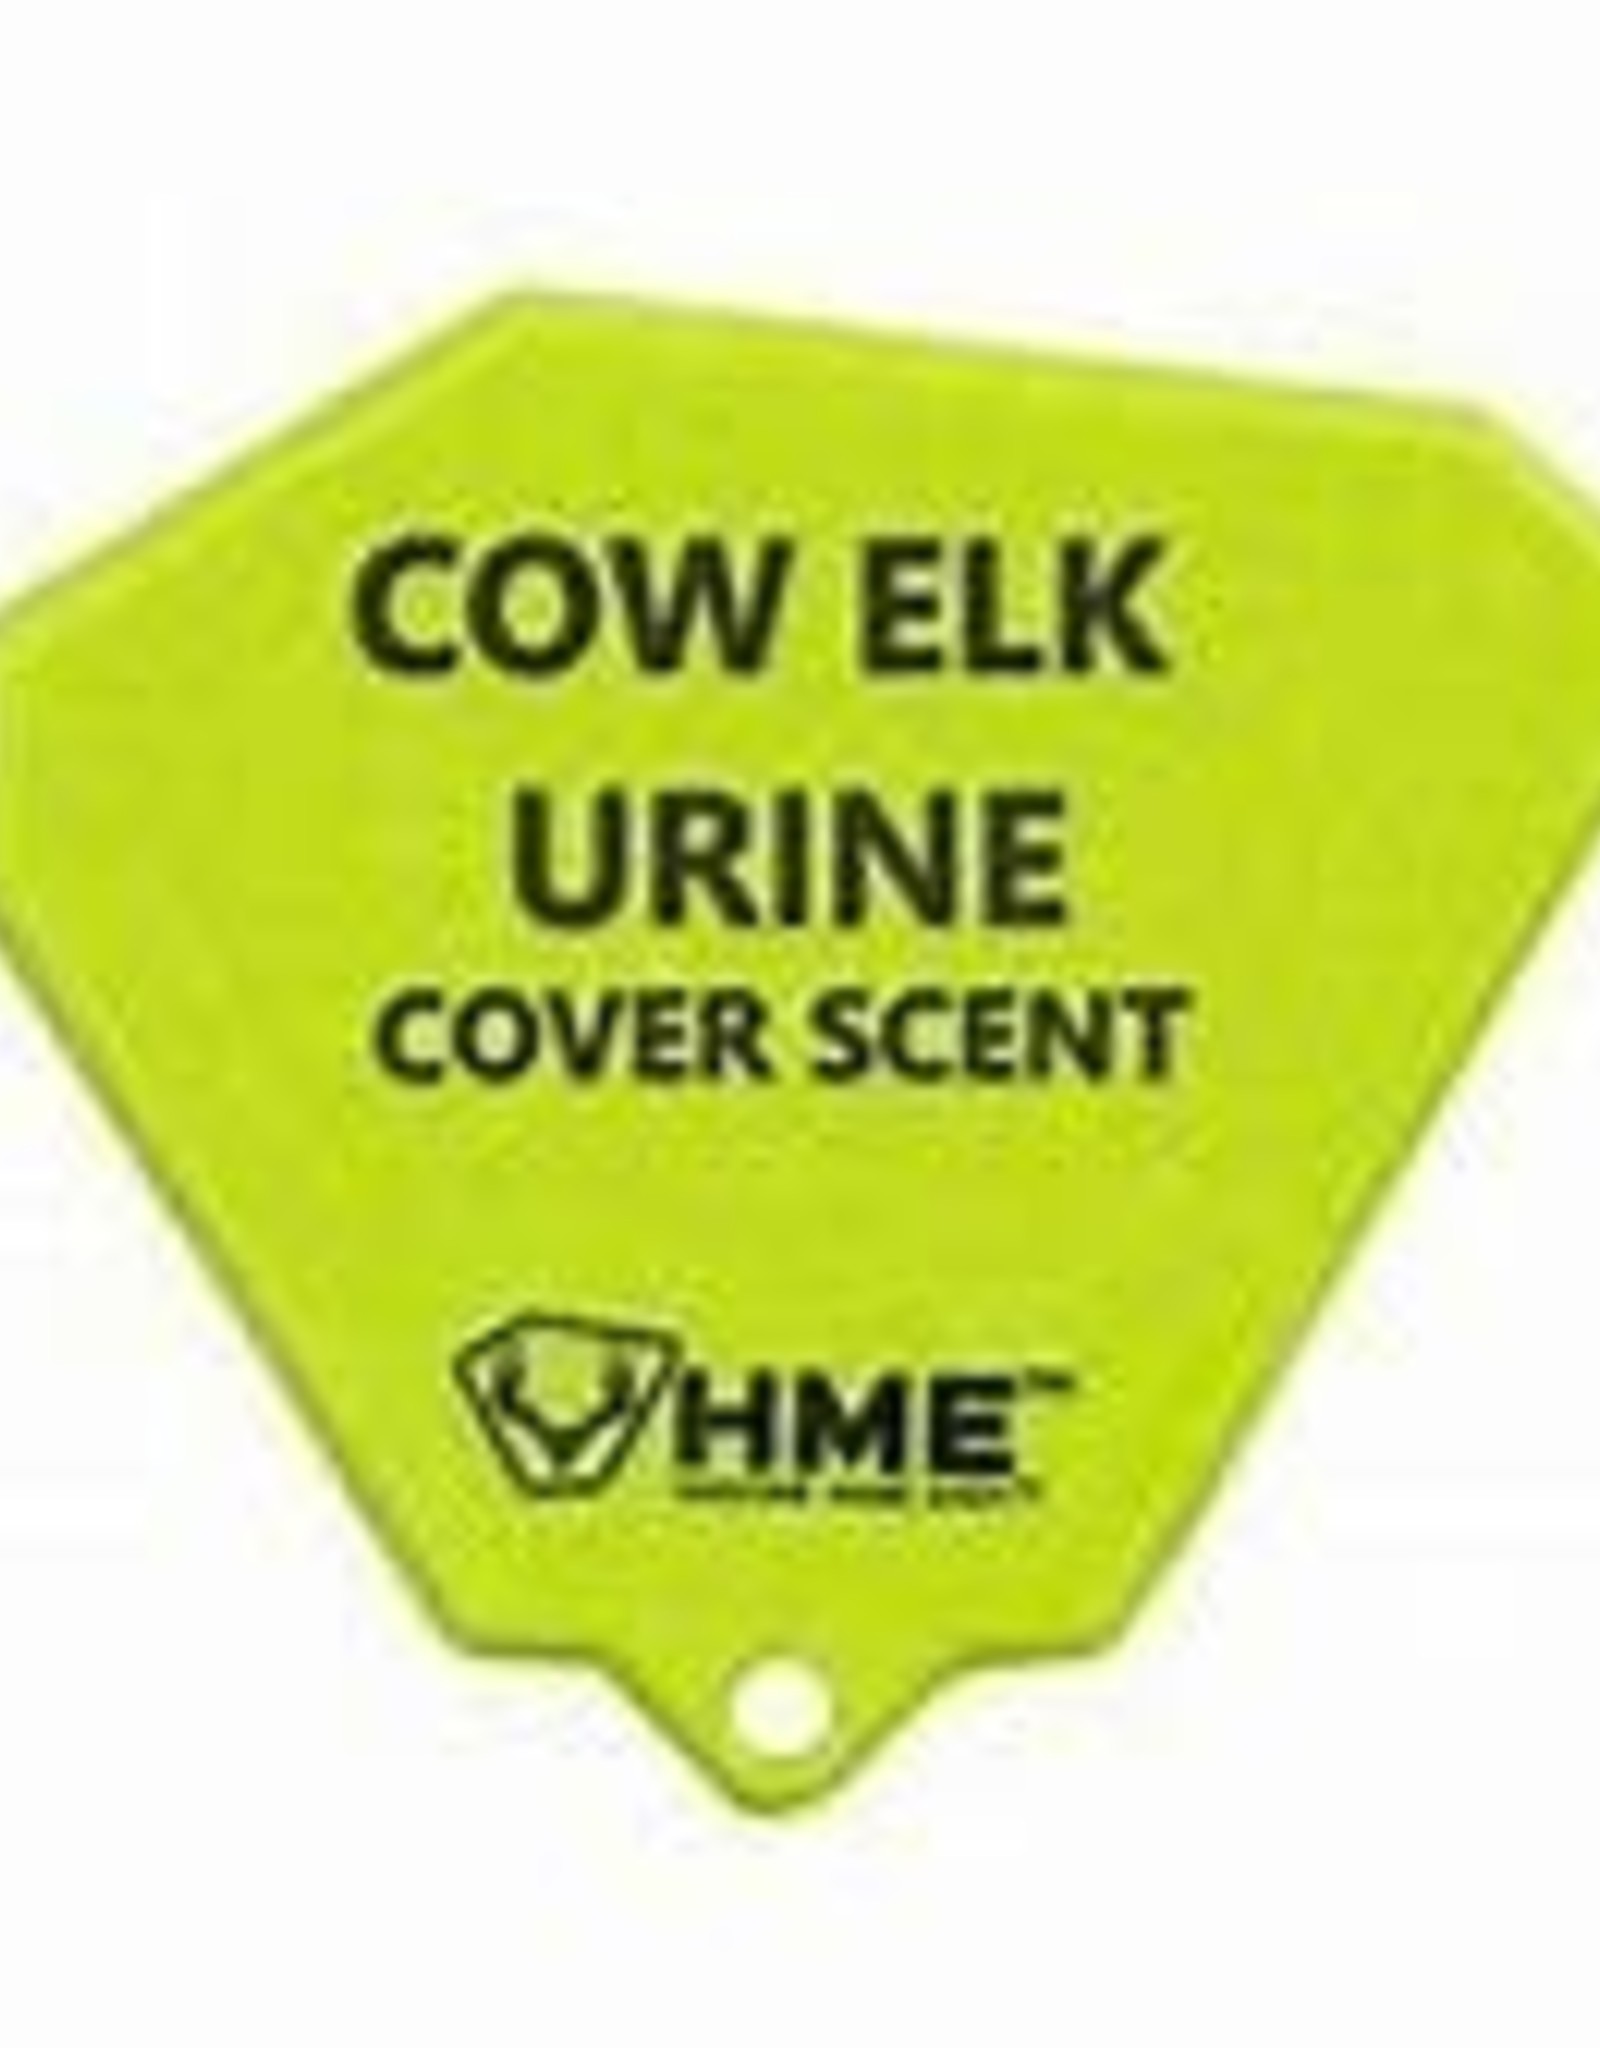 HME Cow Elk Urine